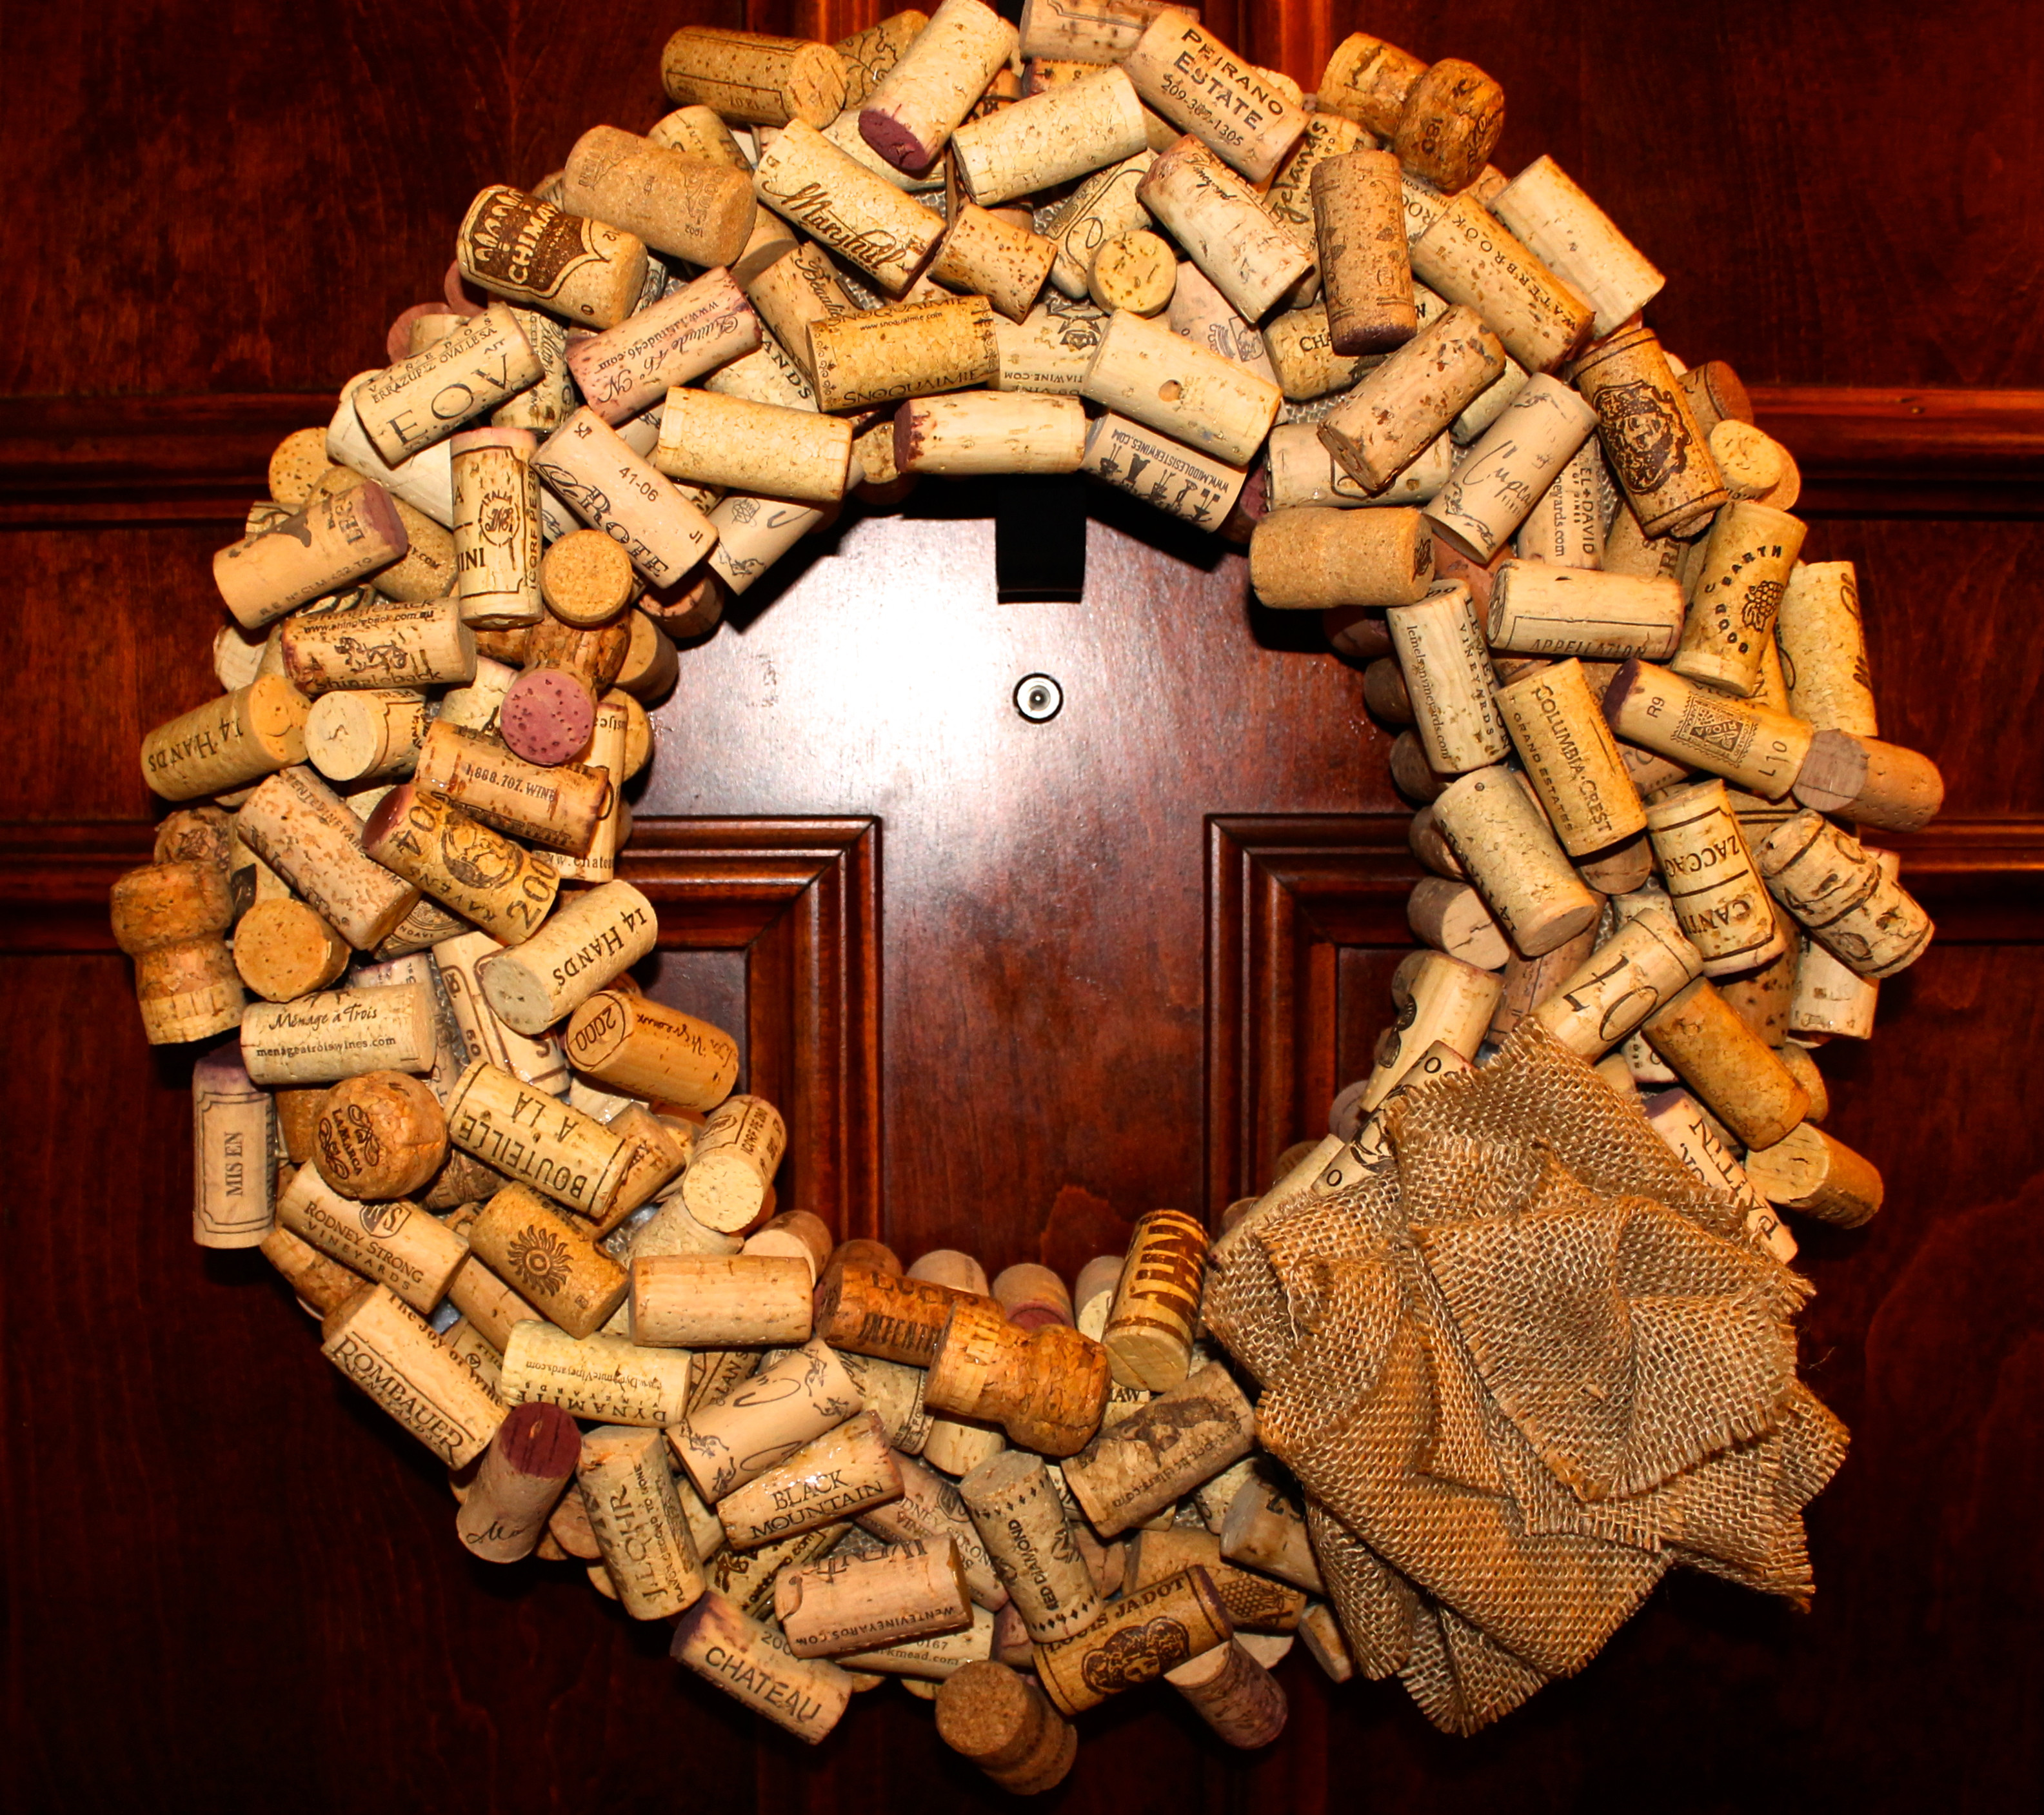 Best ideas about DIY Wine Corks
. Save or Pin DIY Wine Cork Wreath Now.